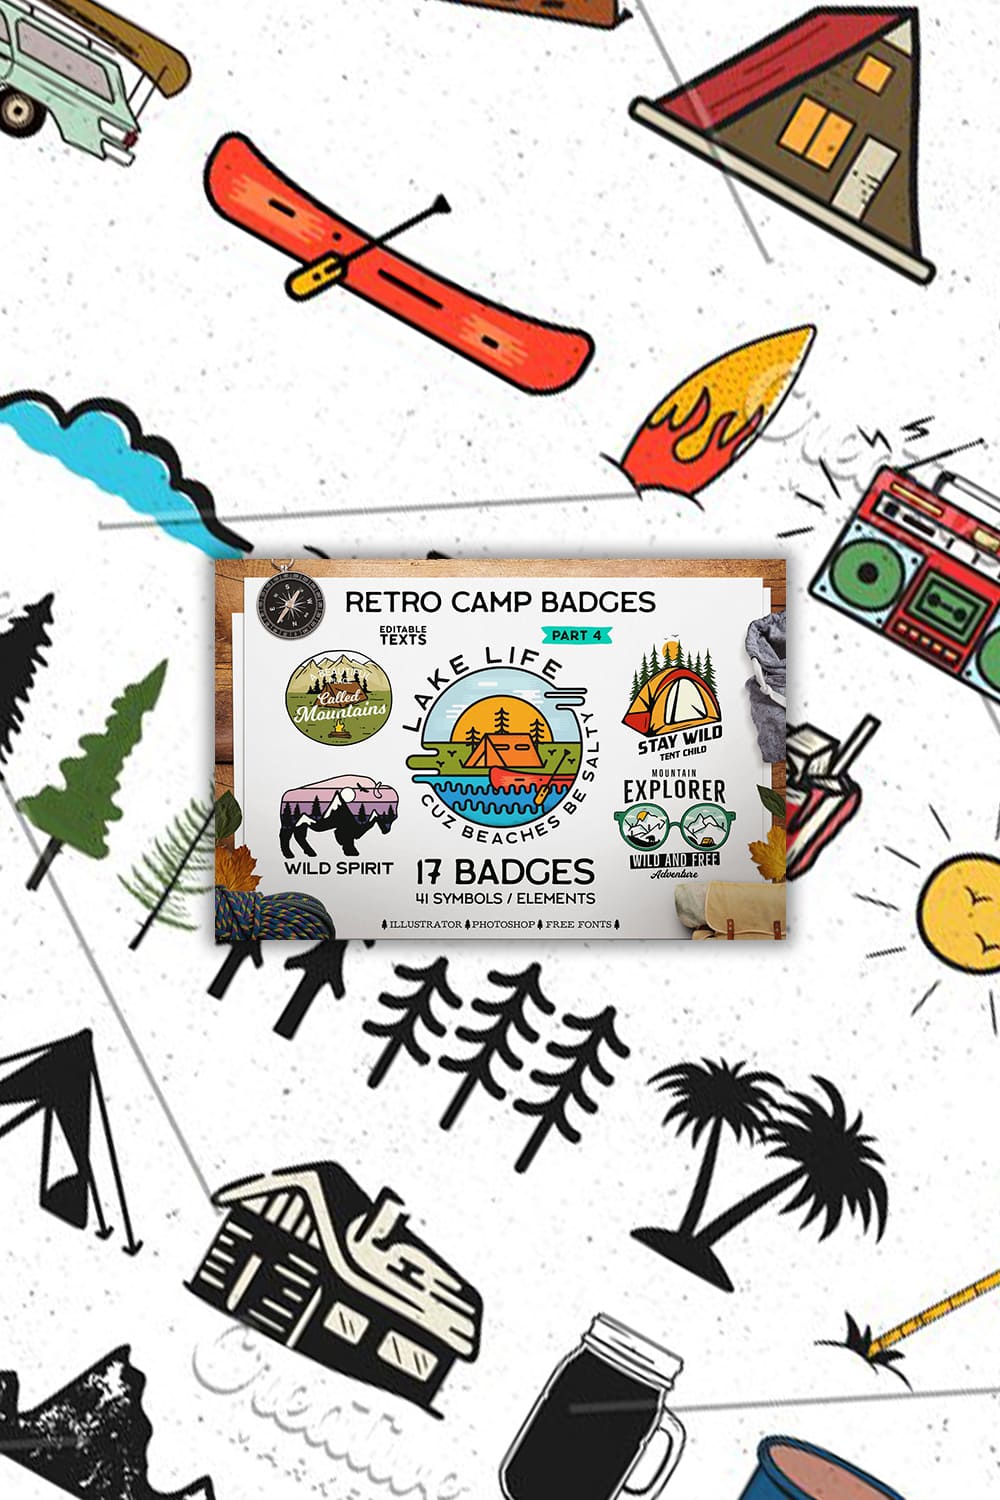 Retro Camp Badges Logos. Part 4.